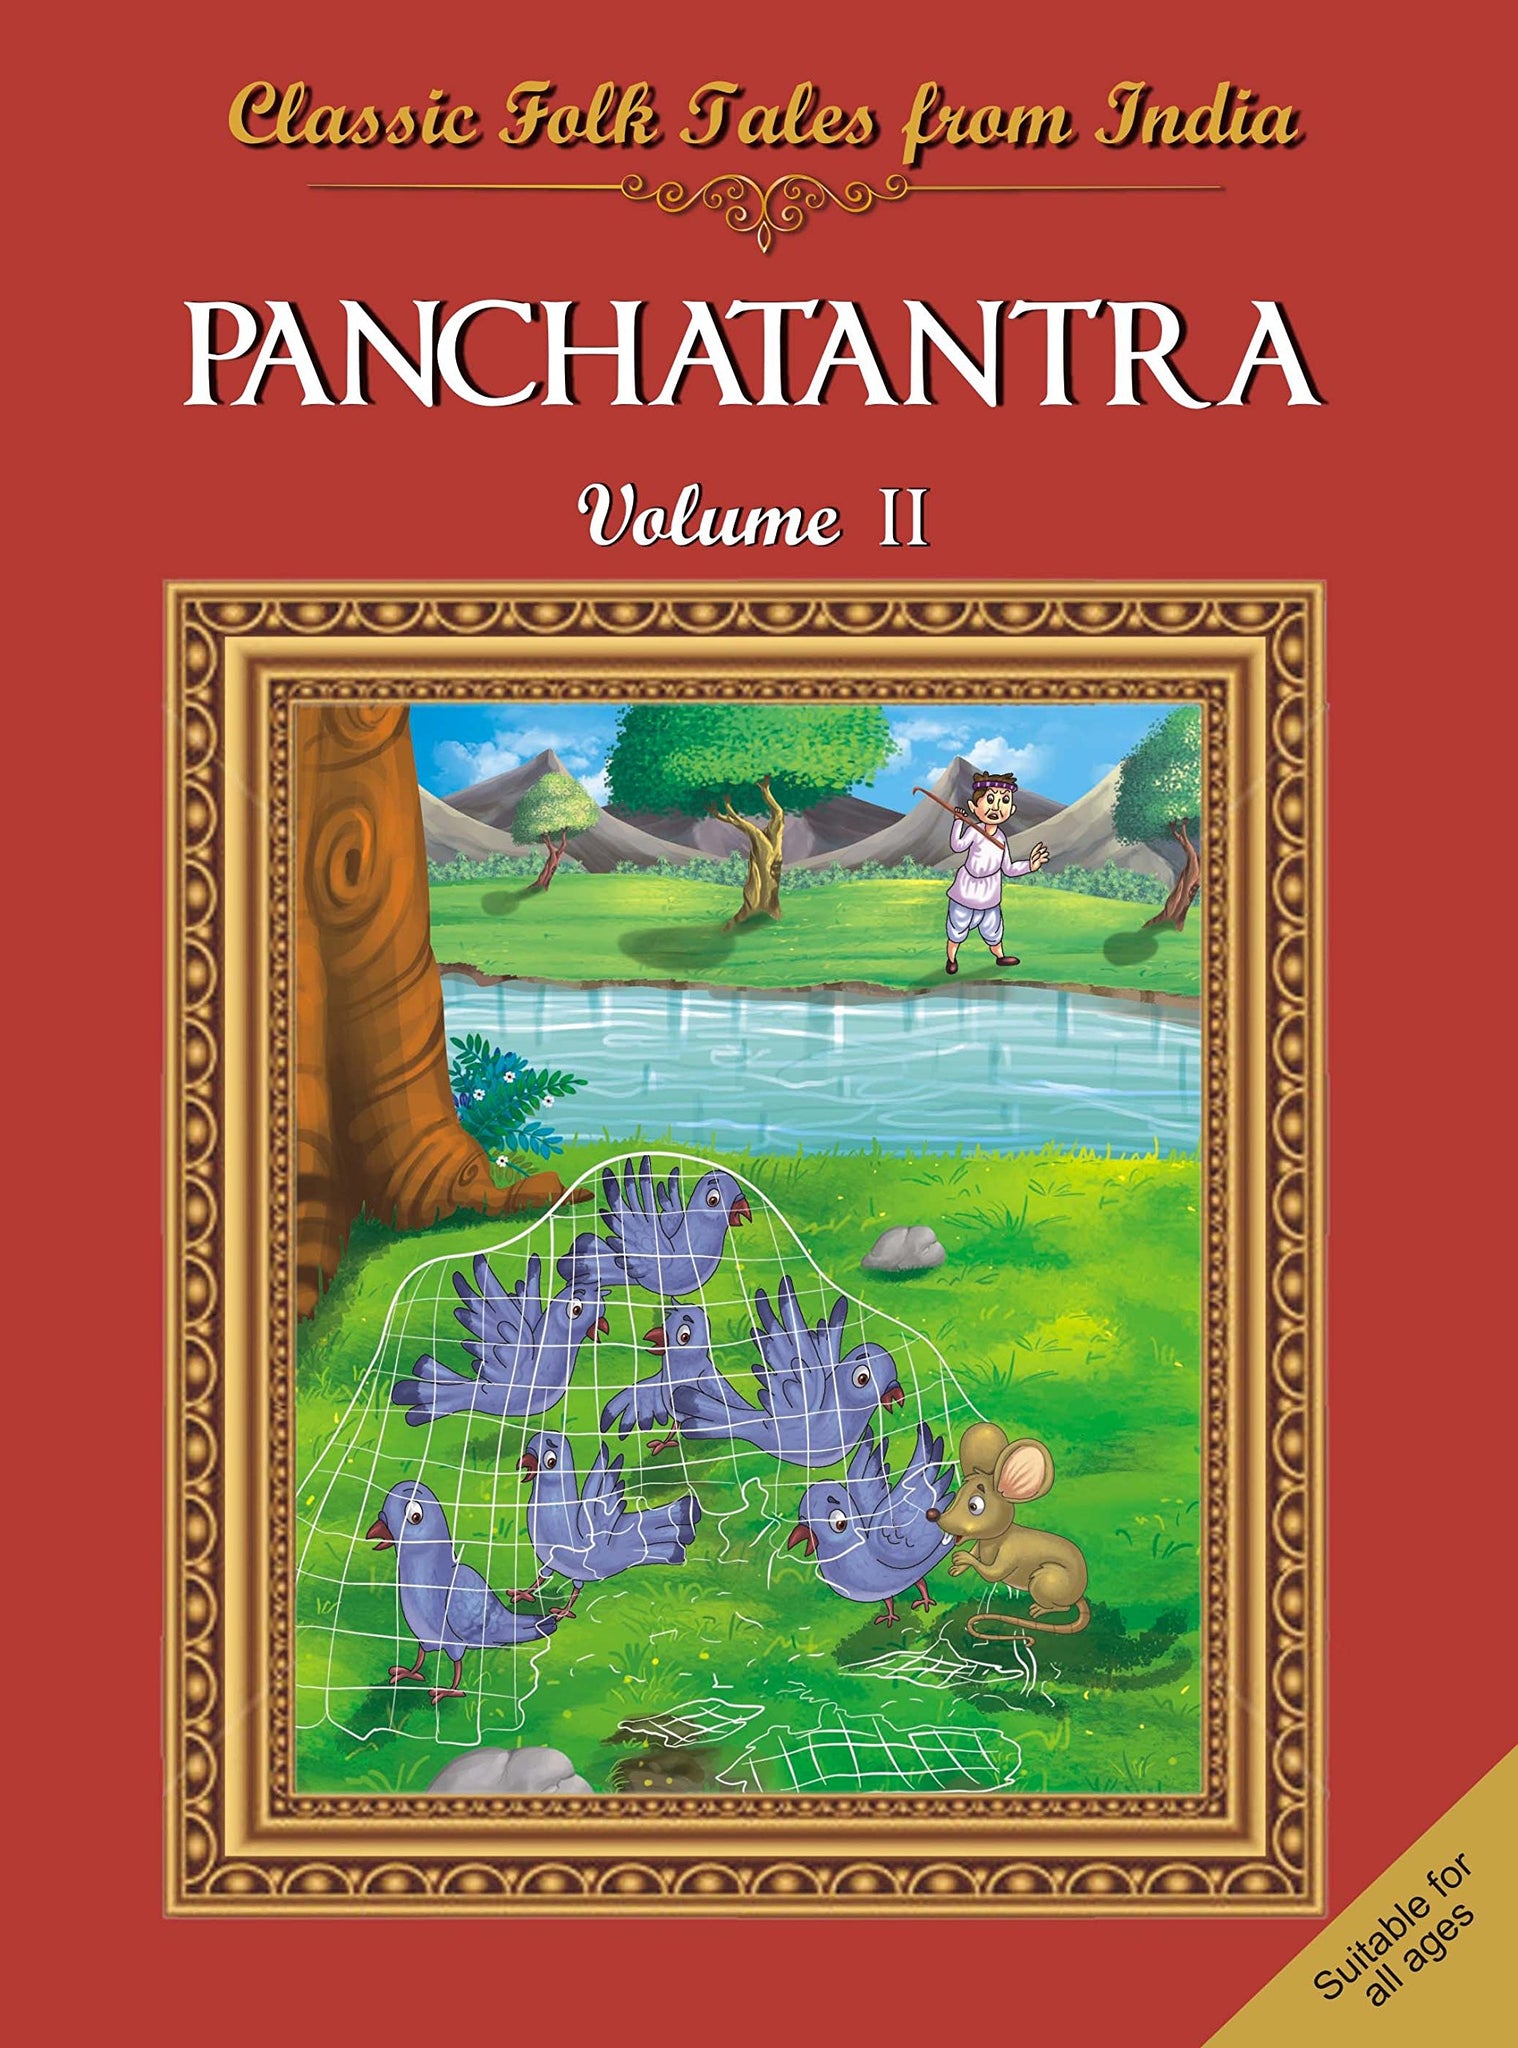 Classic Folk TalesFrom India :Panchatantra Vol II